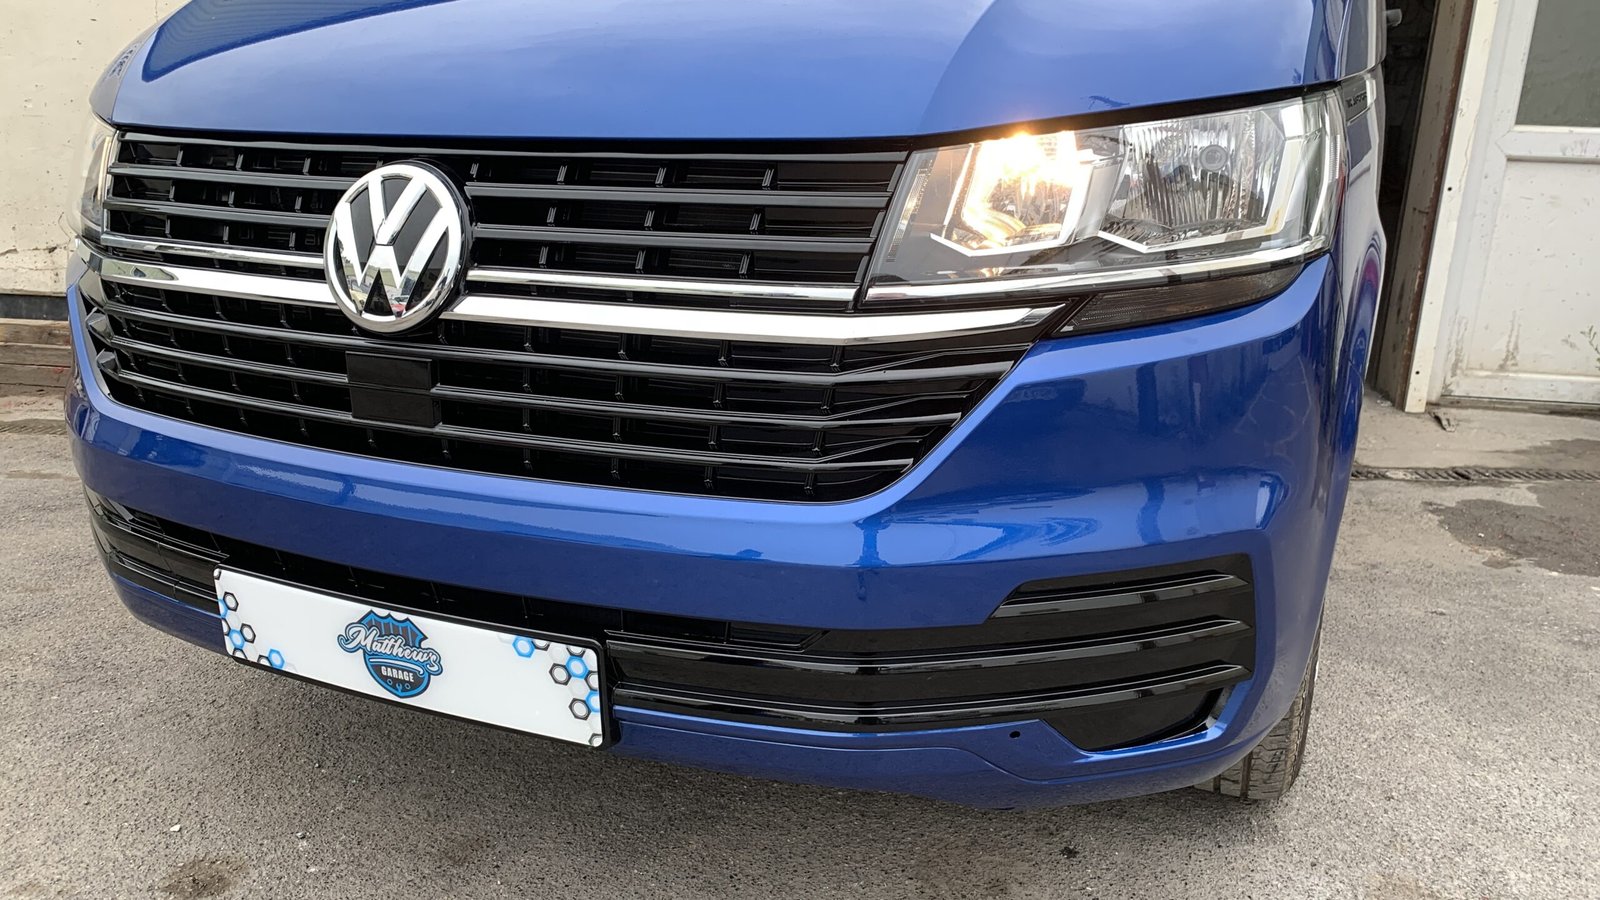 Bumper respray on a Volkswagen Transporter T5 T6 - Car body repair